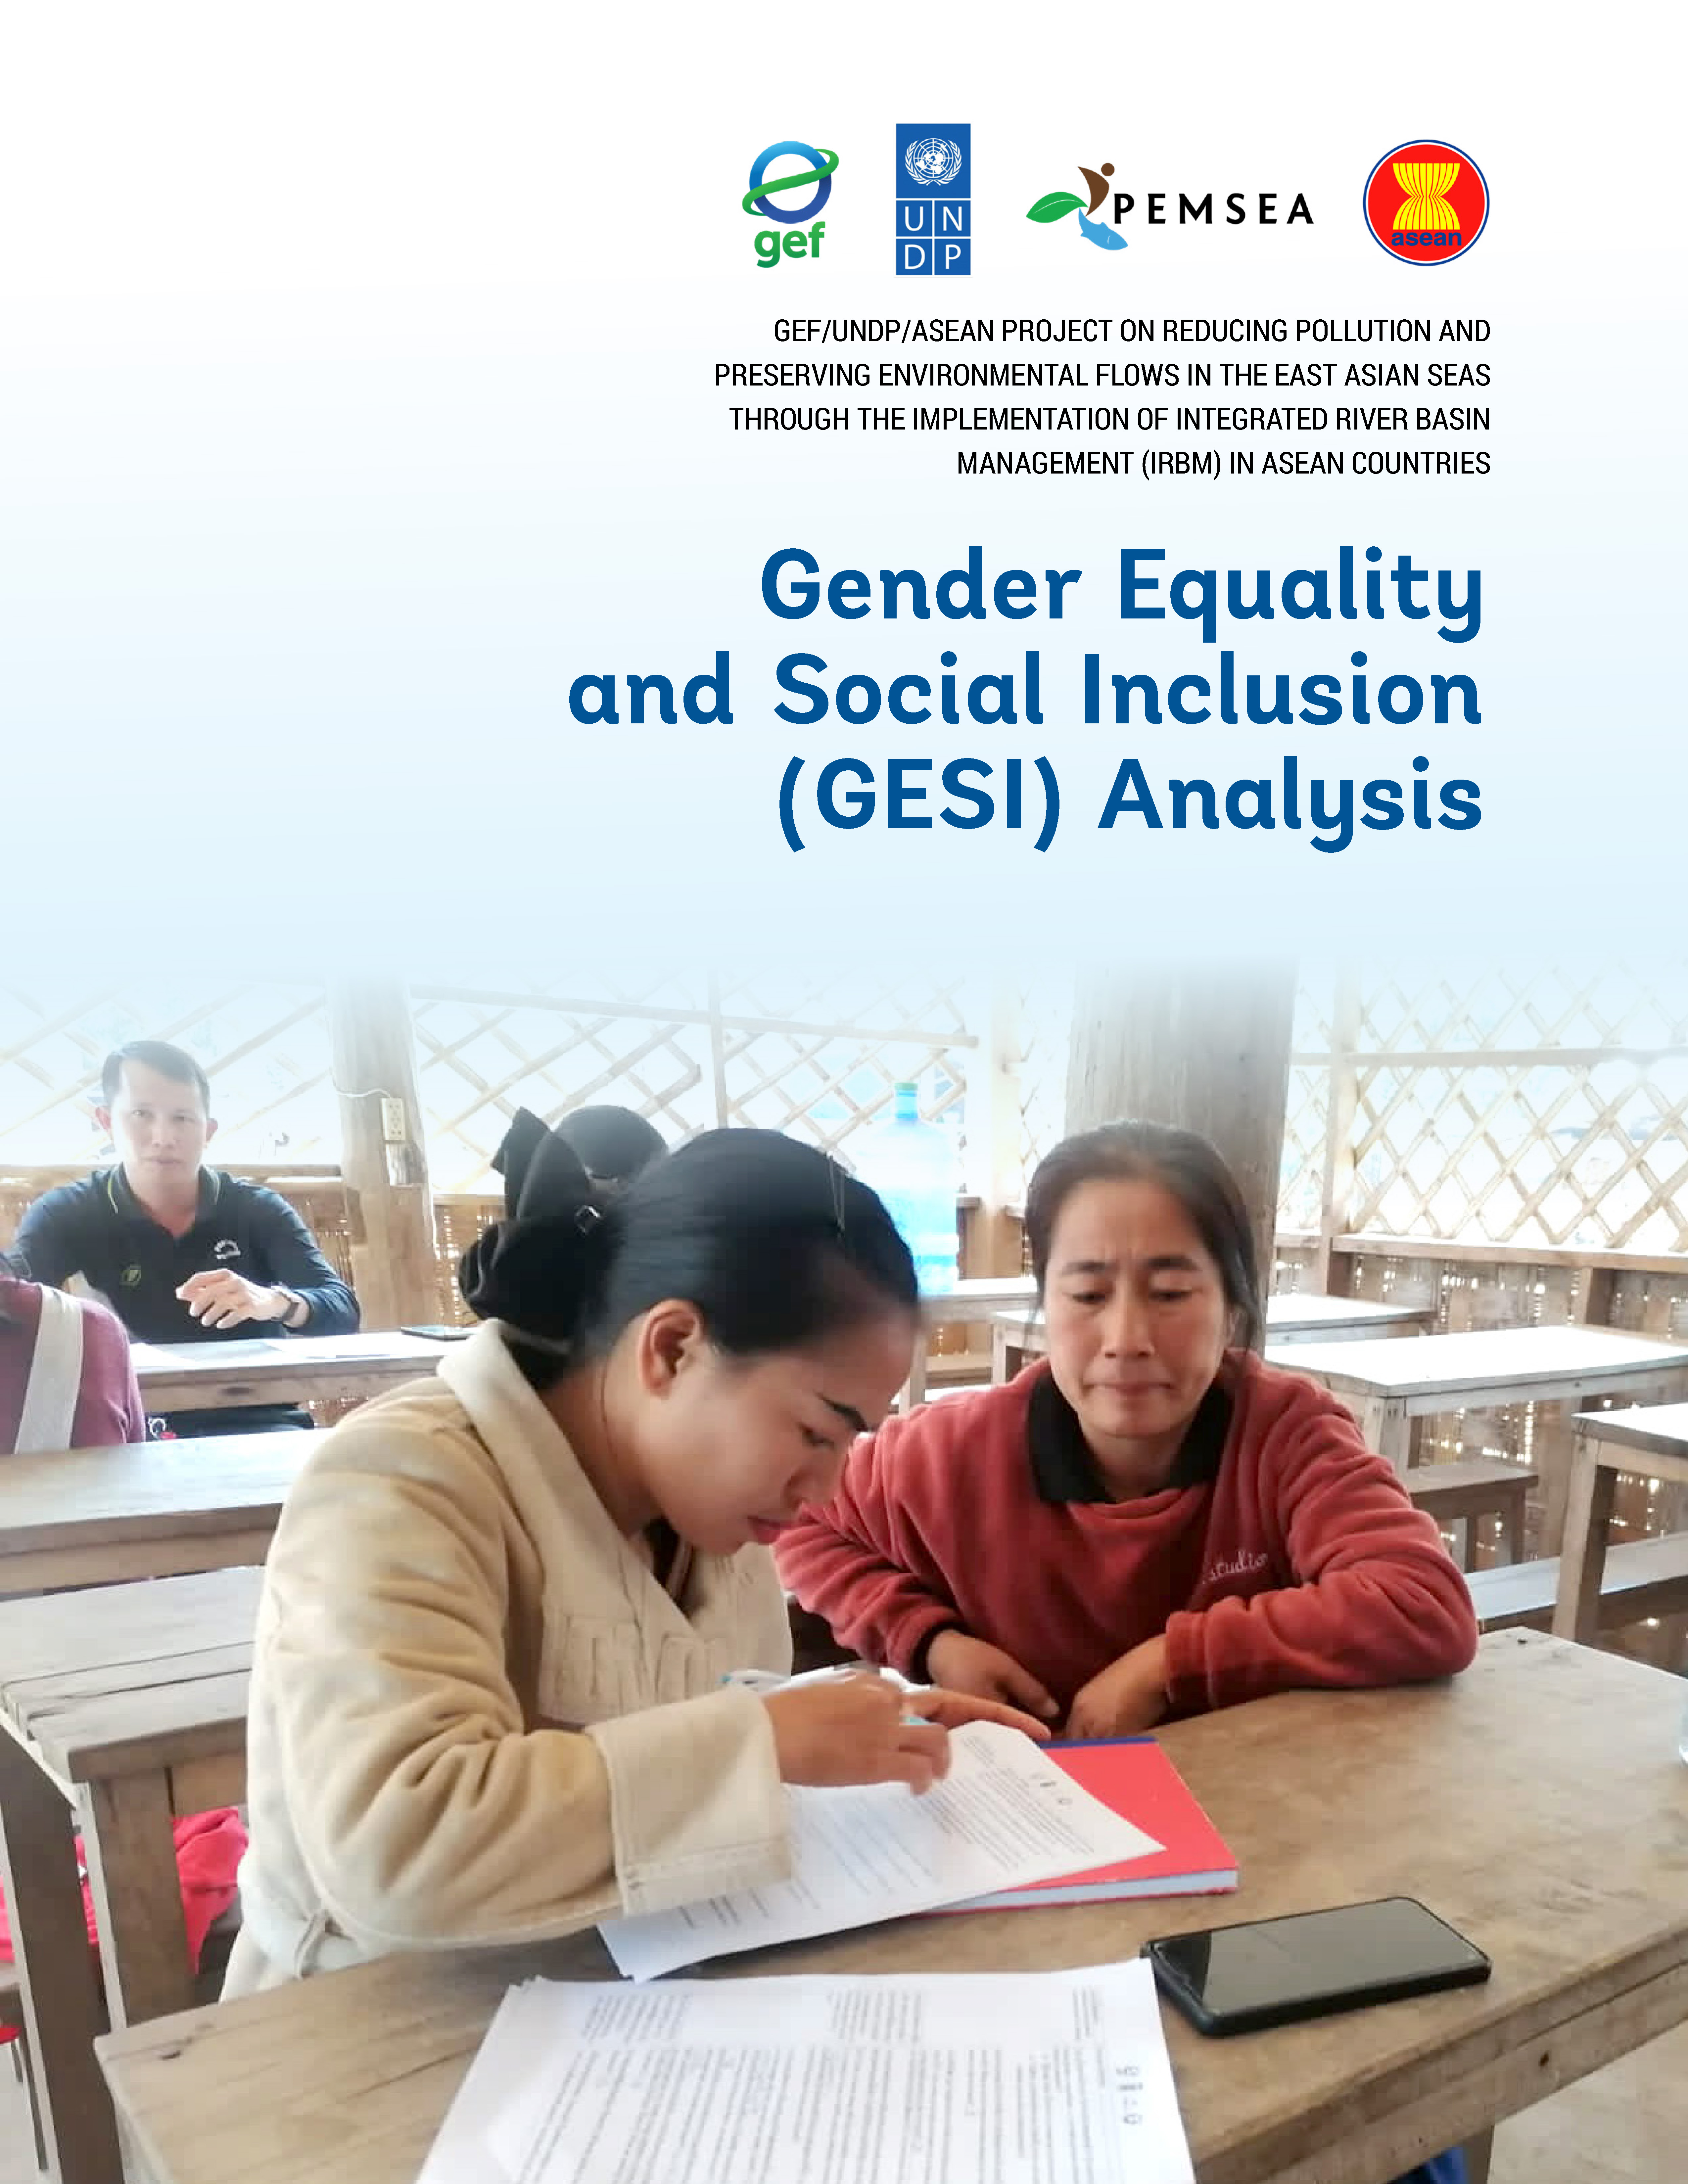 GEF/UNDP/ASEAN IRBM Project: GESI Analysis Report